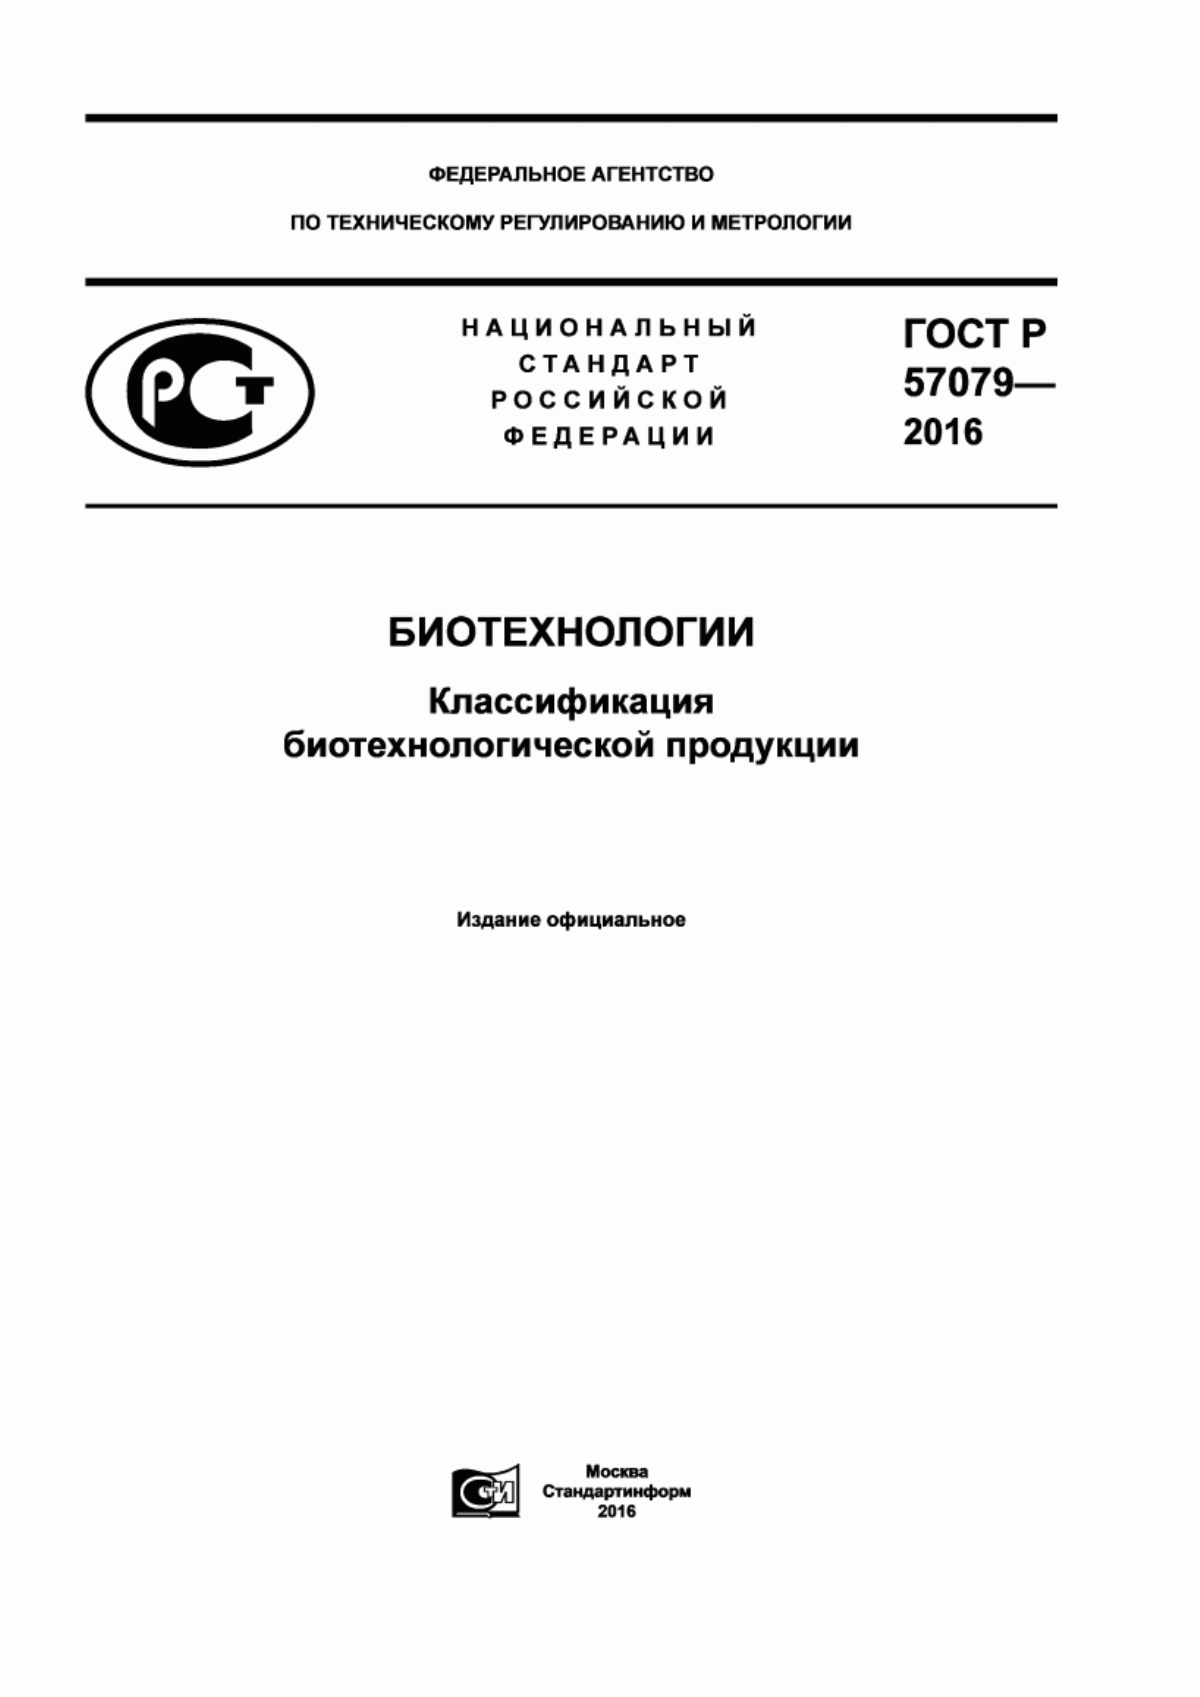 ГОСТ Р 57079-2016 Биотехнологии. Классификация биотехнологической продукции